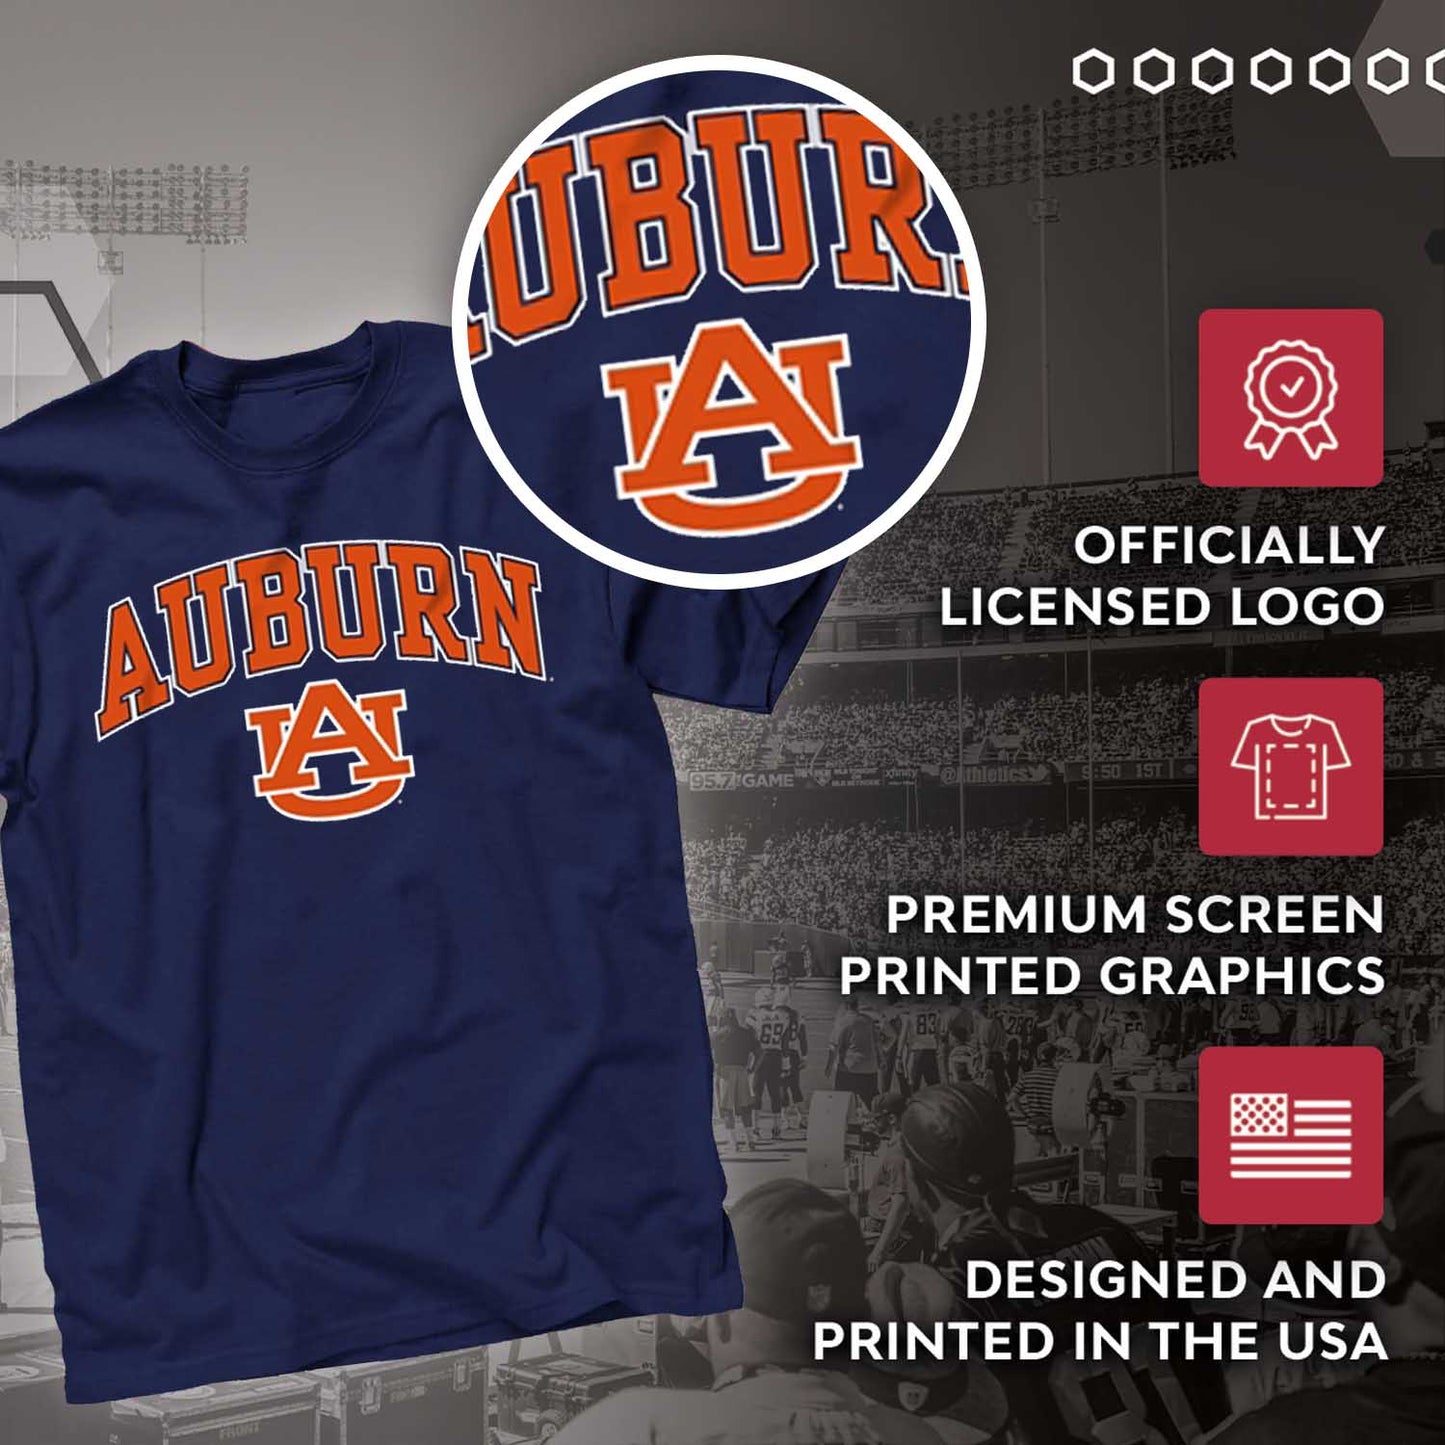 Auburn Tigers NCAA Adult Gameday Cotton T-Shirt - Navy